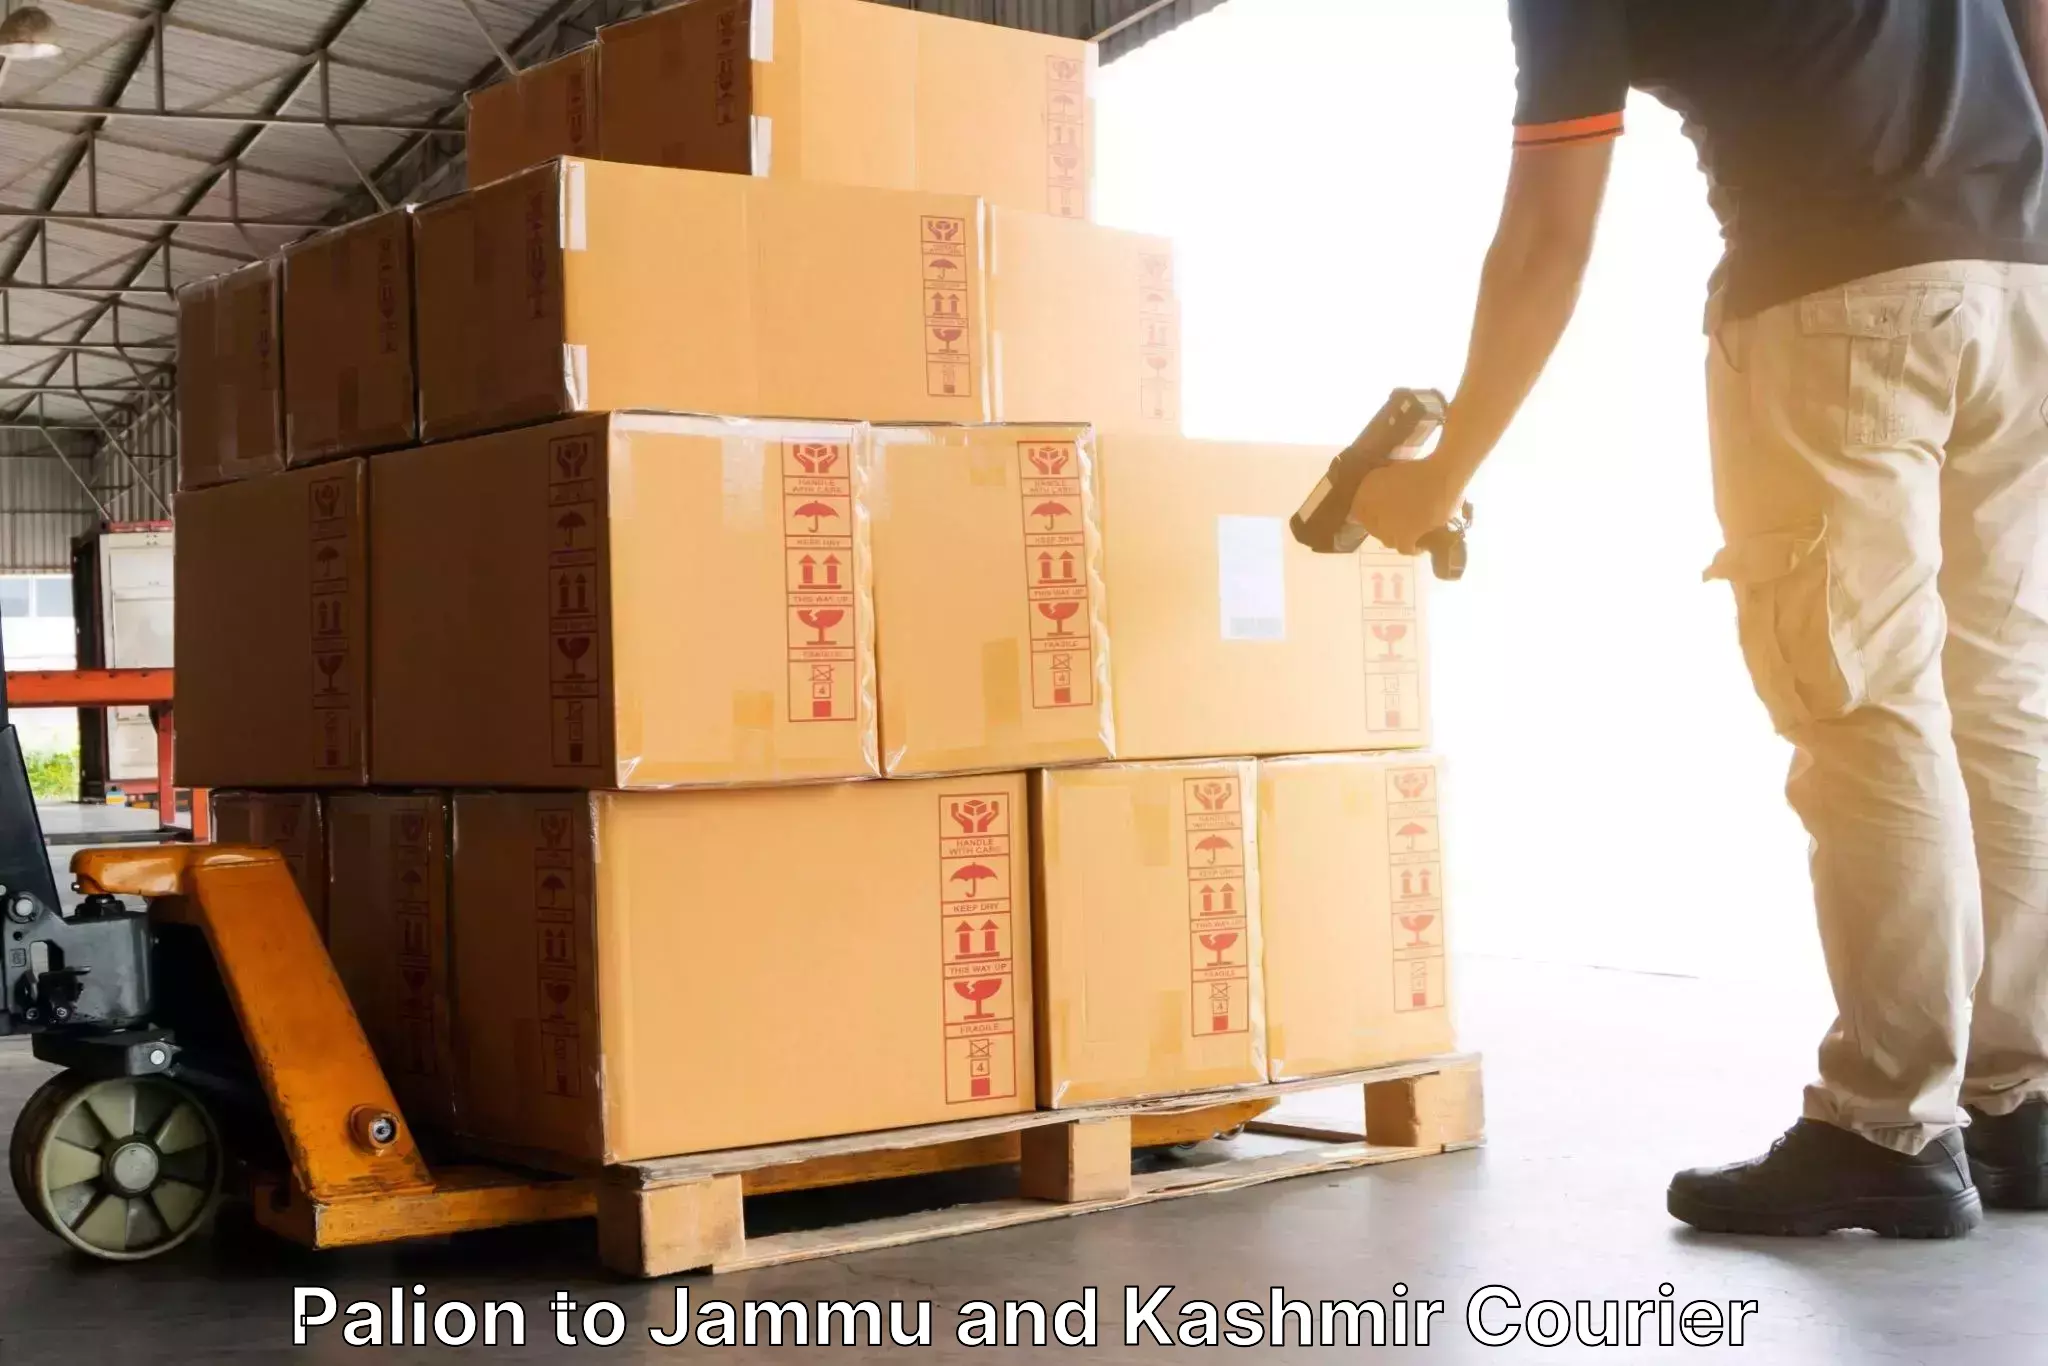 Next day courier Palion to Srinagar Kashmir